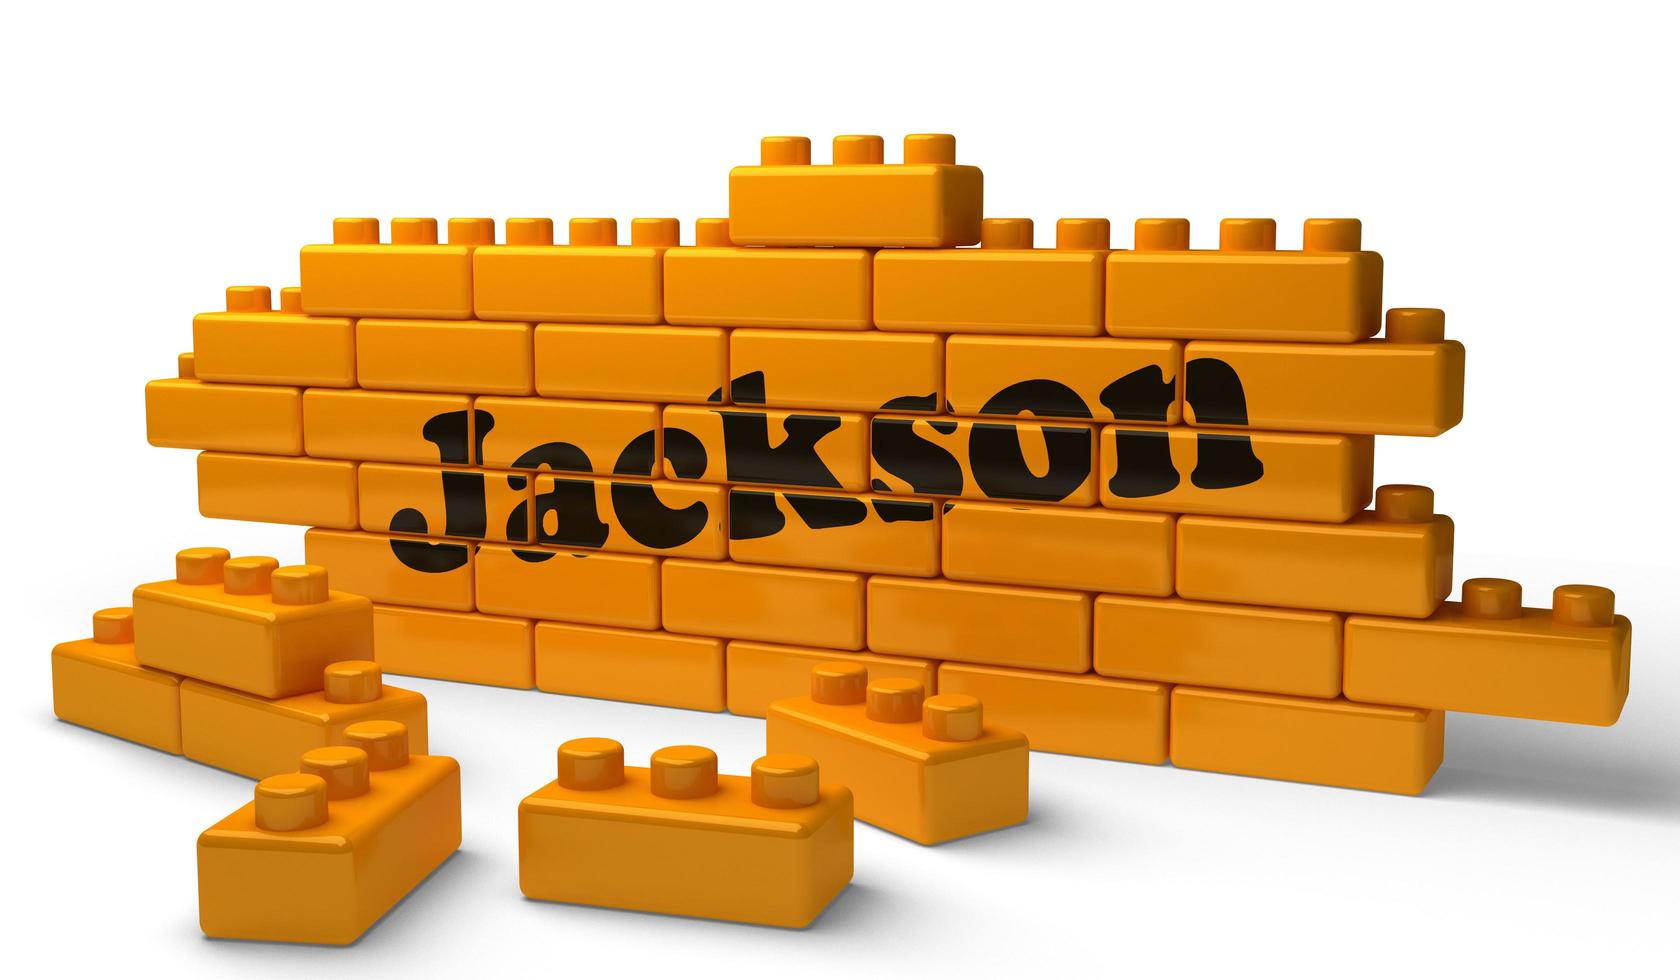 Jackson word on yellow brick wall photo